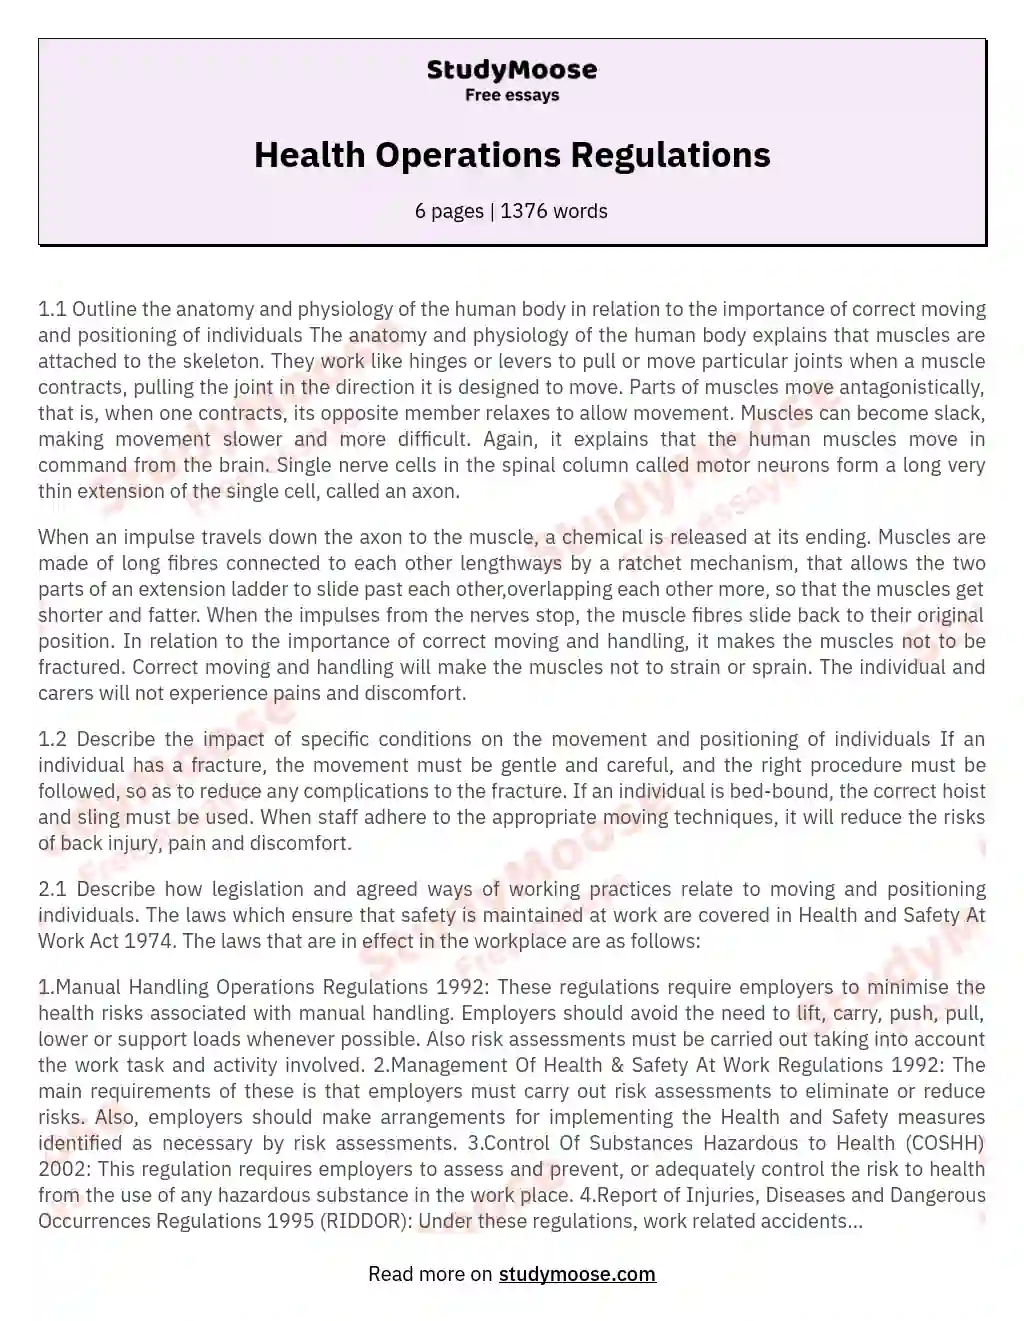 Health Operations Regulations essay